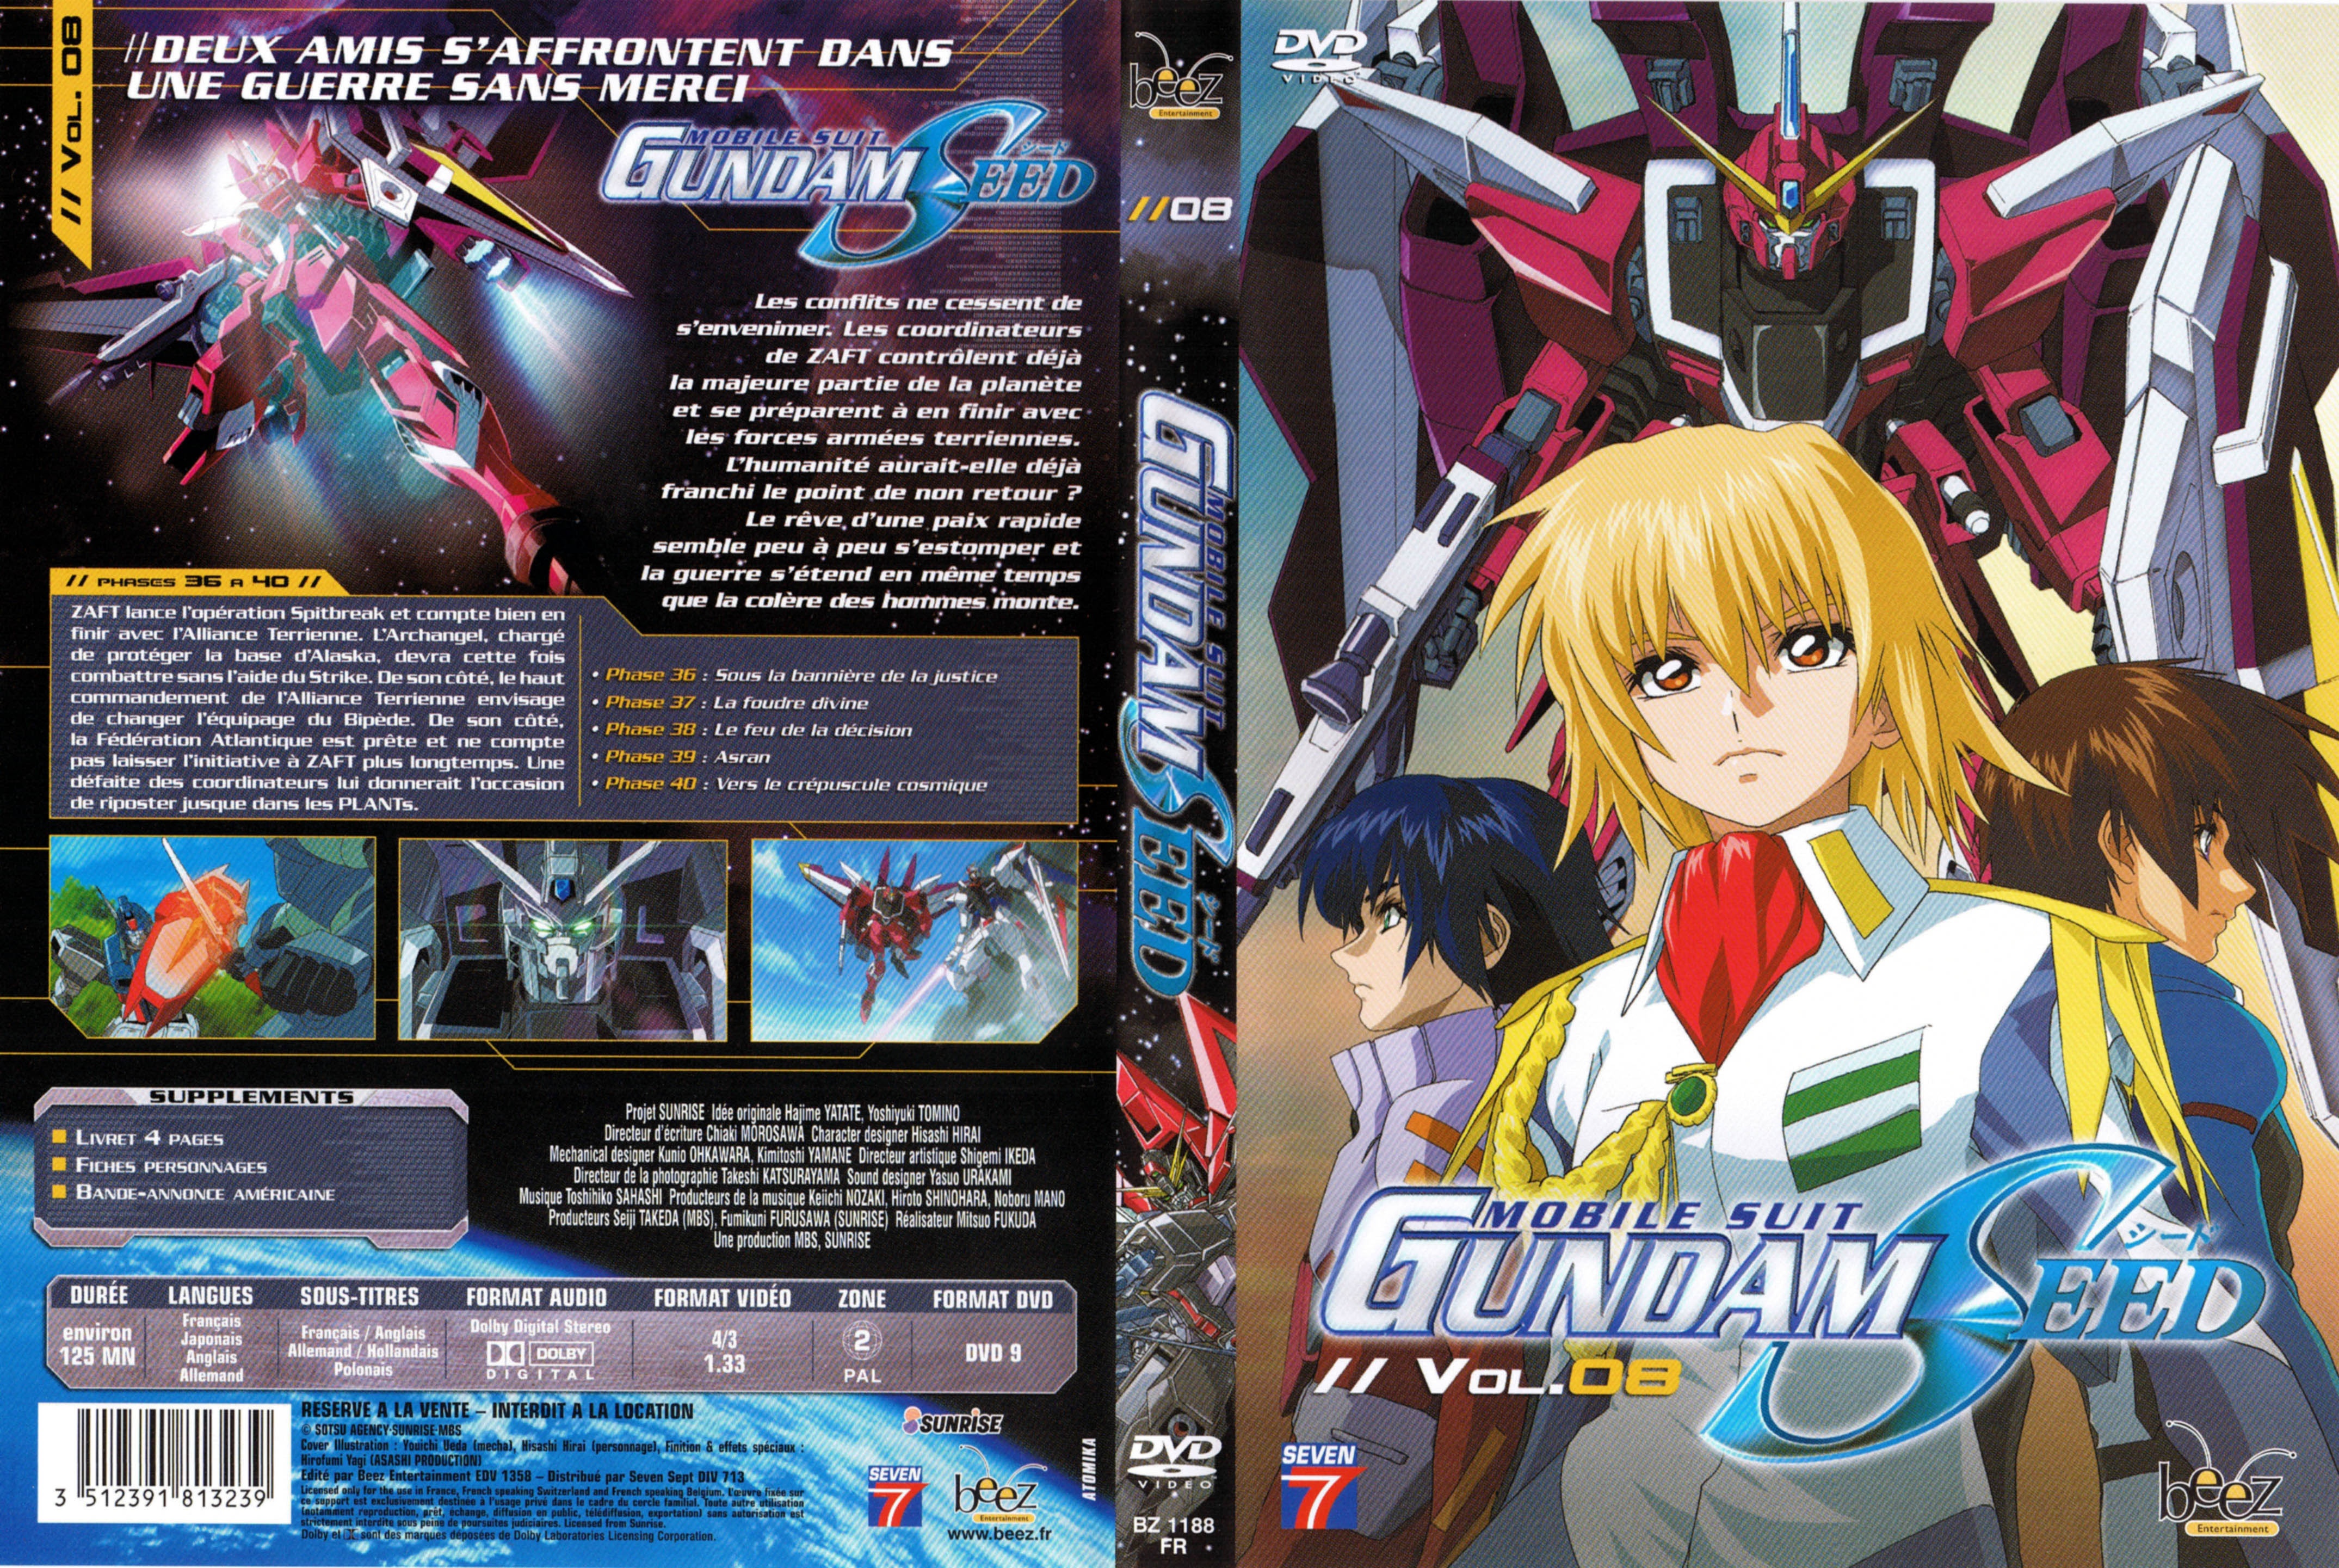 Jaquette DVD Gundam seed vol 08